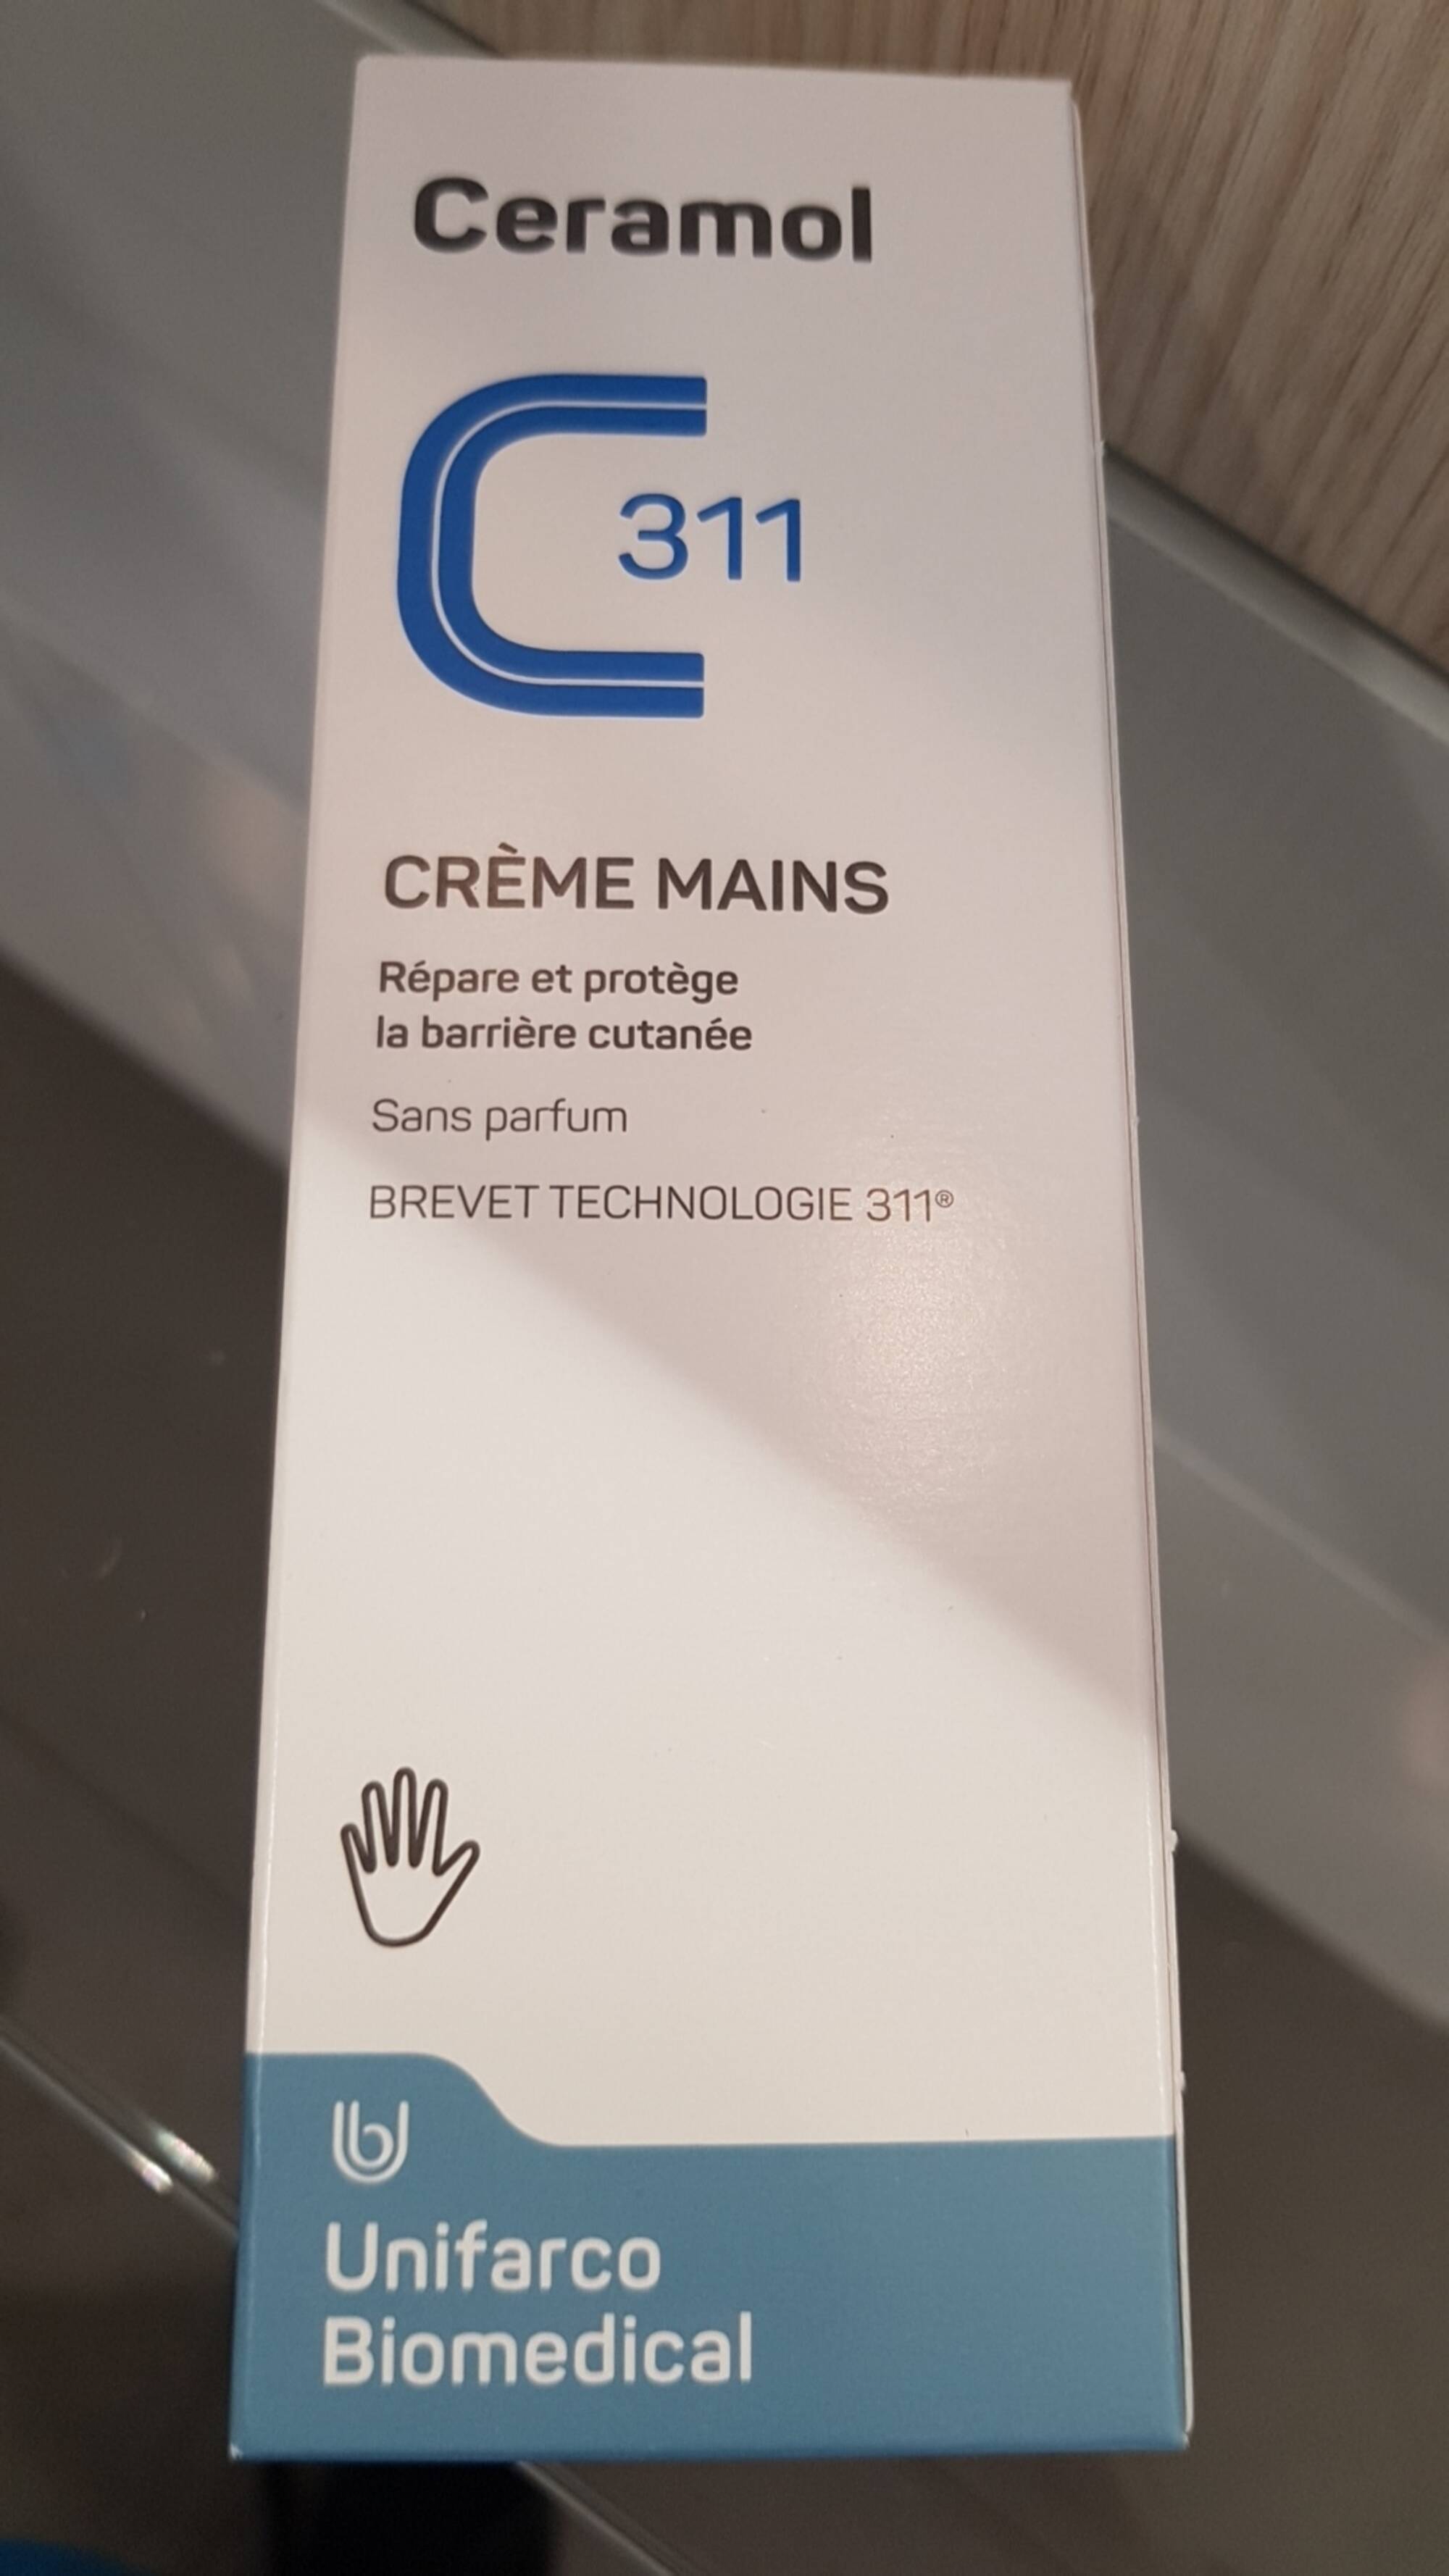 UNIFARCO BIOMEDICAL - Ceramol C311 - Crème mains